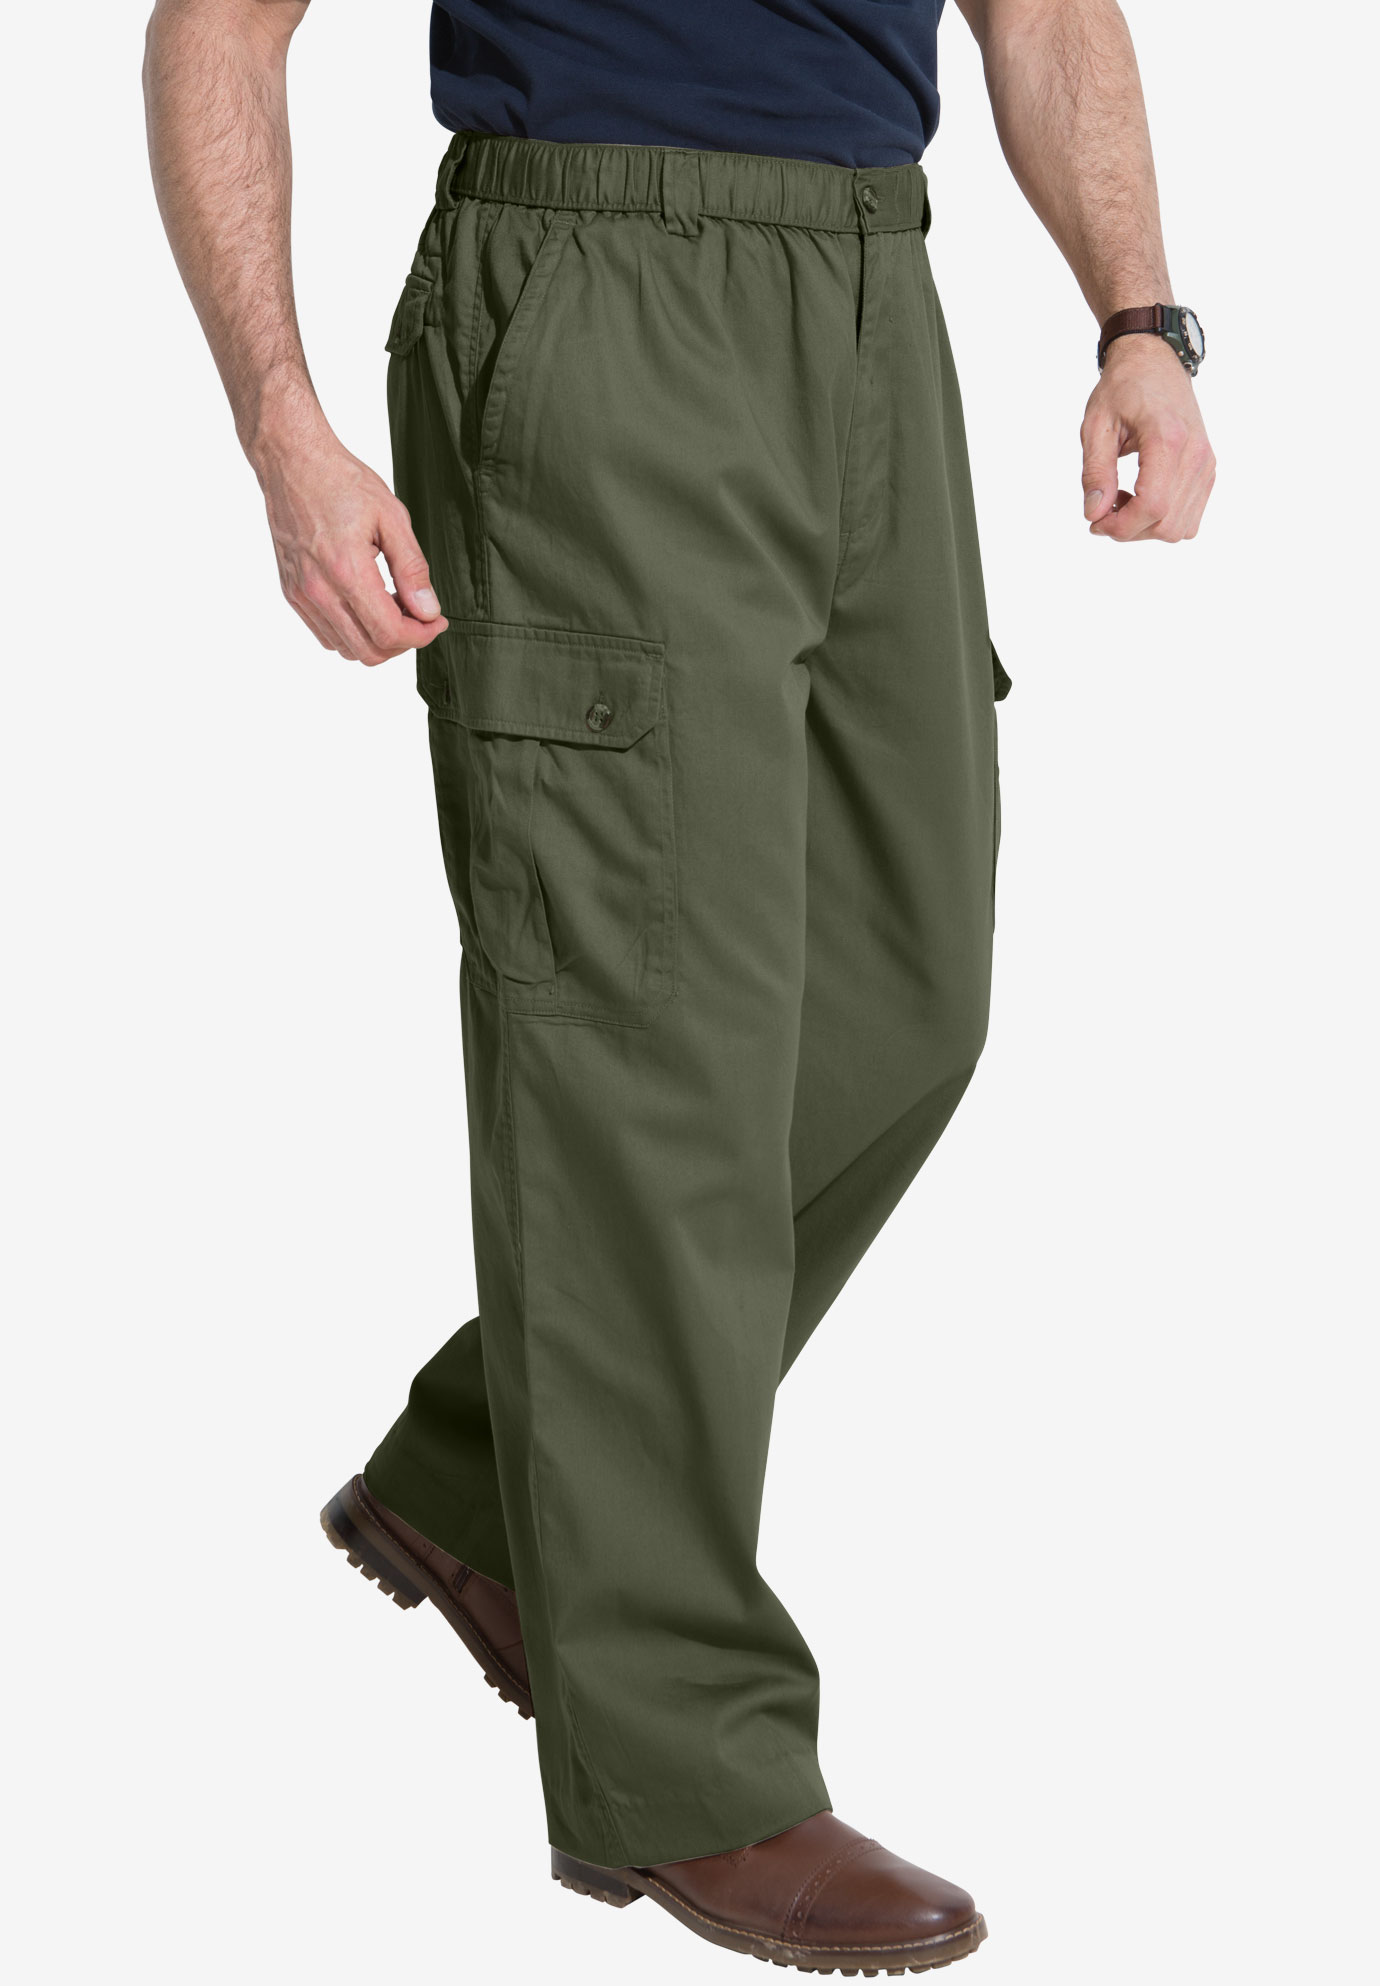 Knockarounds® Full-Elastic Waist Cargo Pants